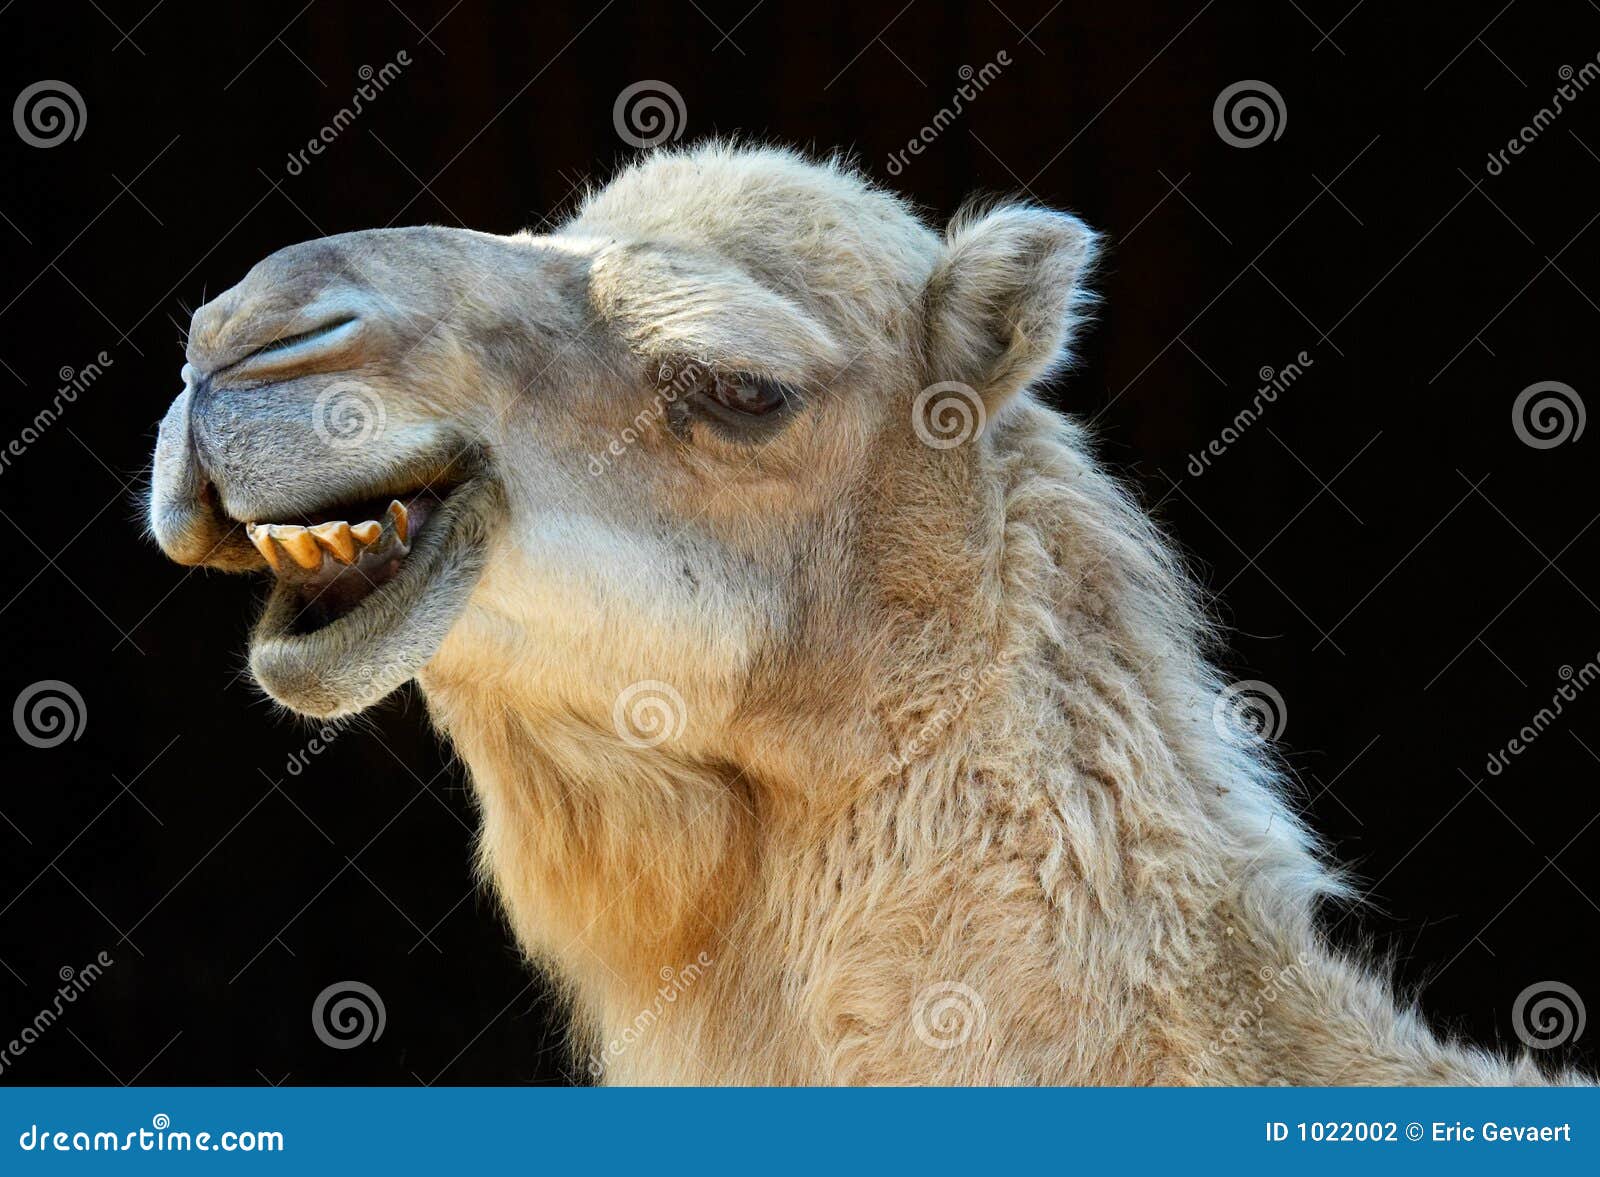 smiling camel